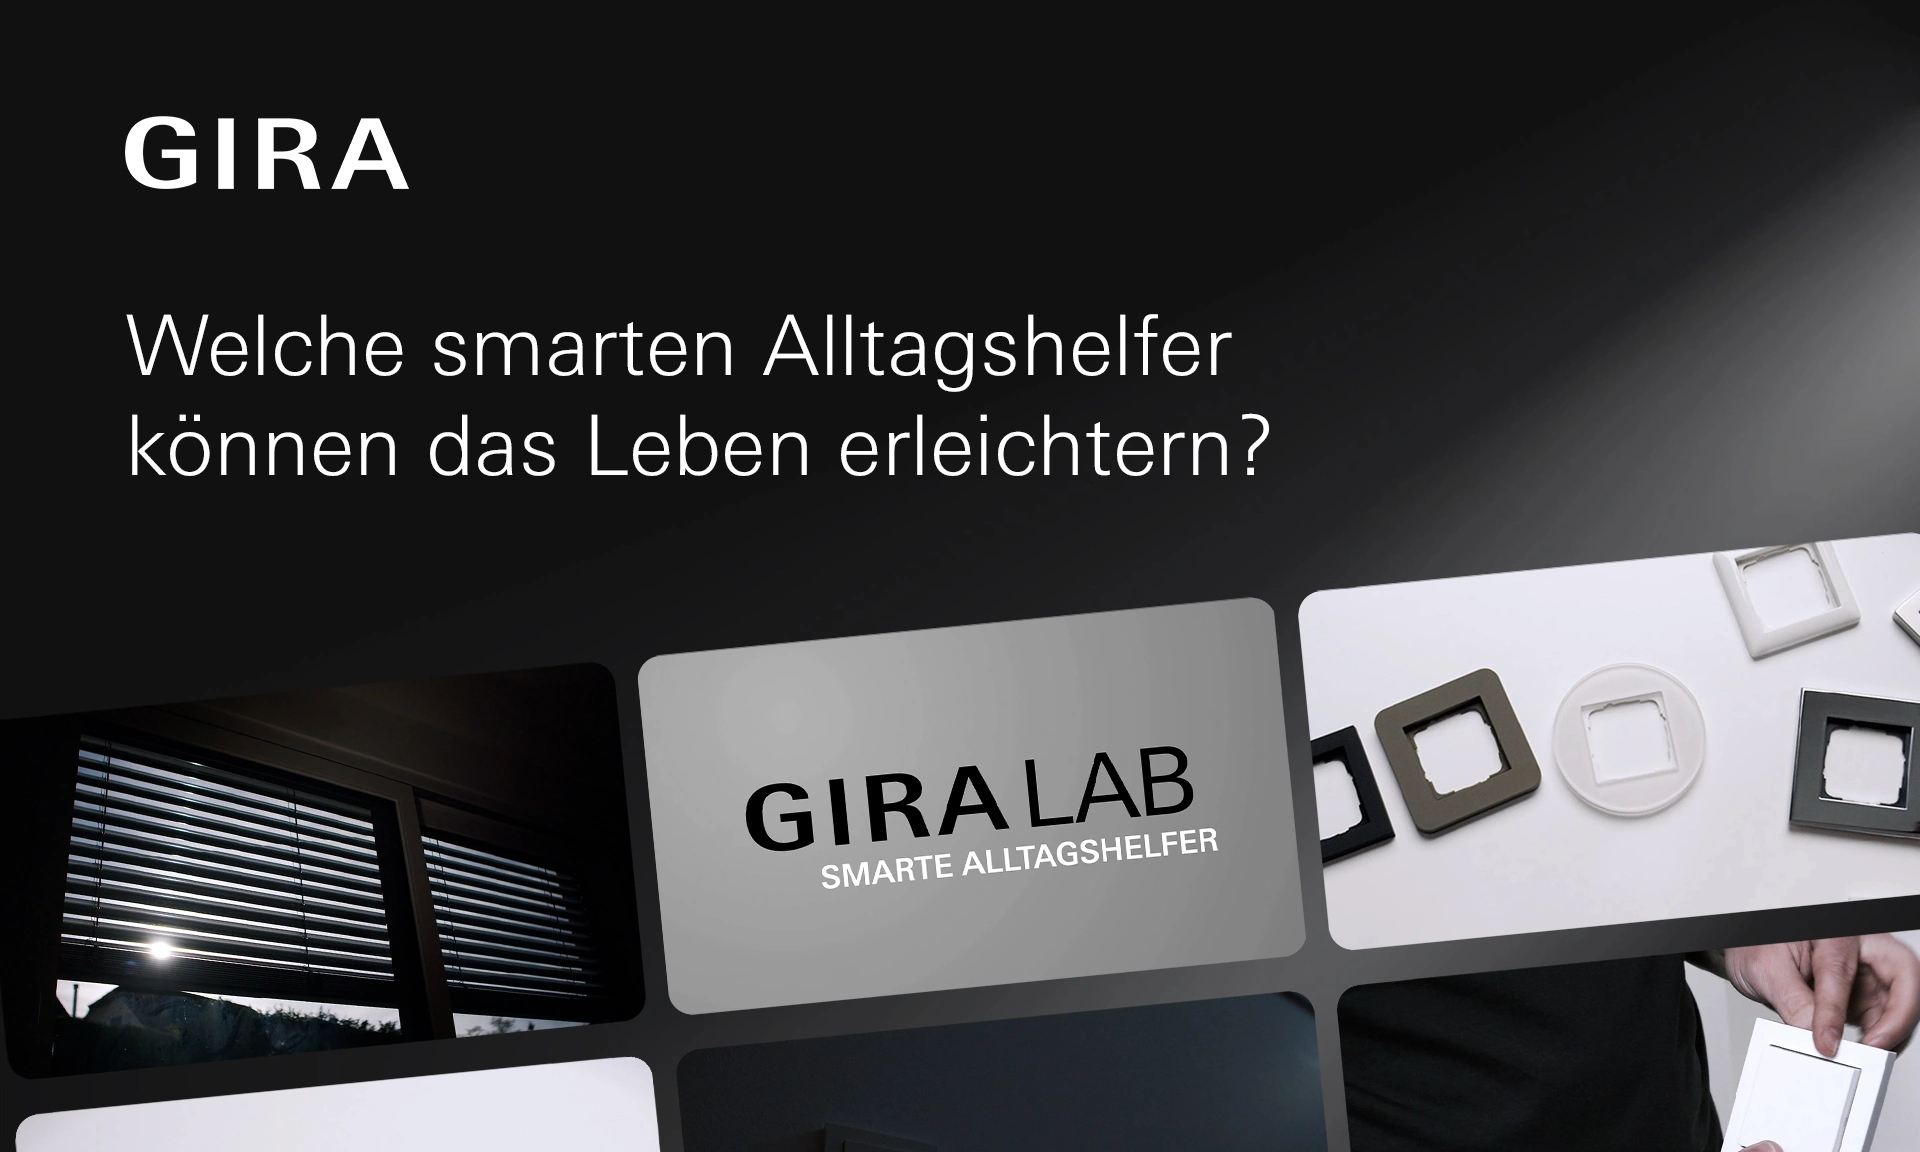 Gira Lab auf YouTube